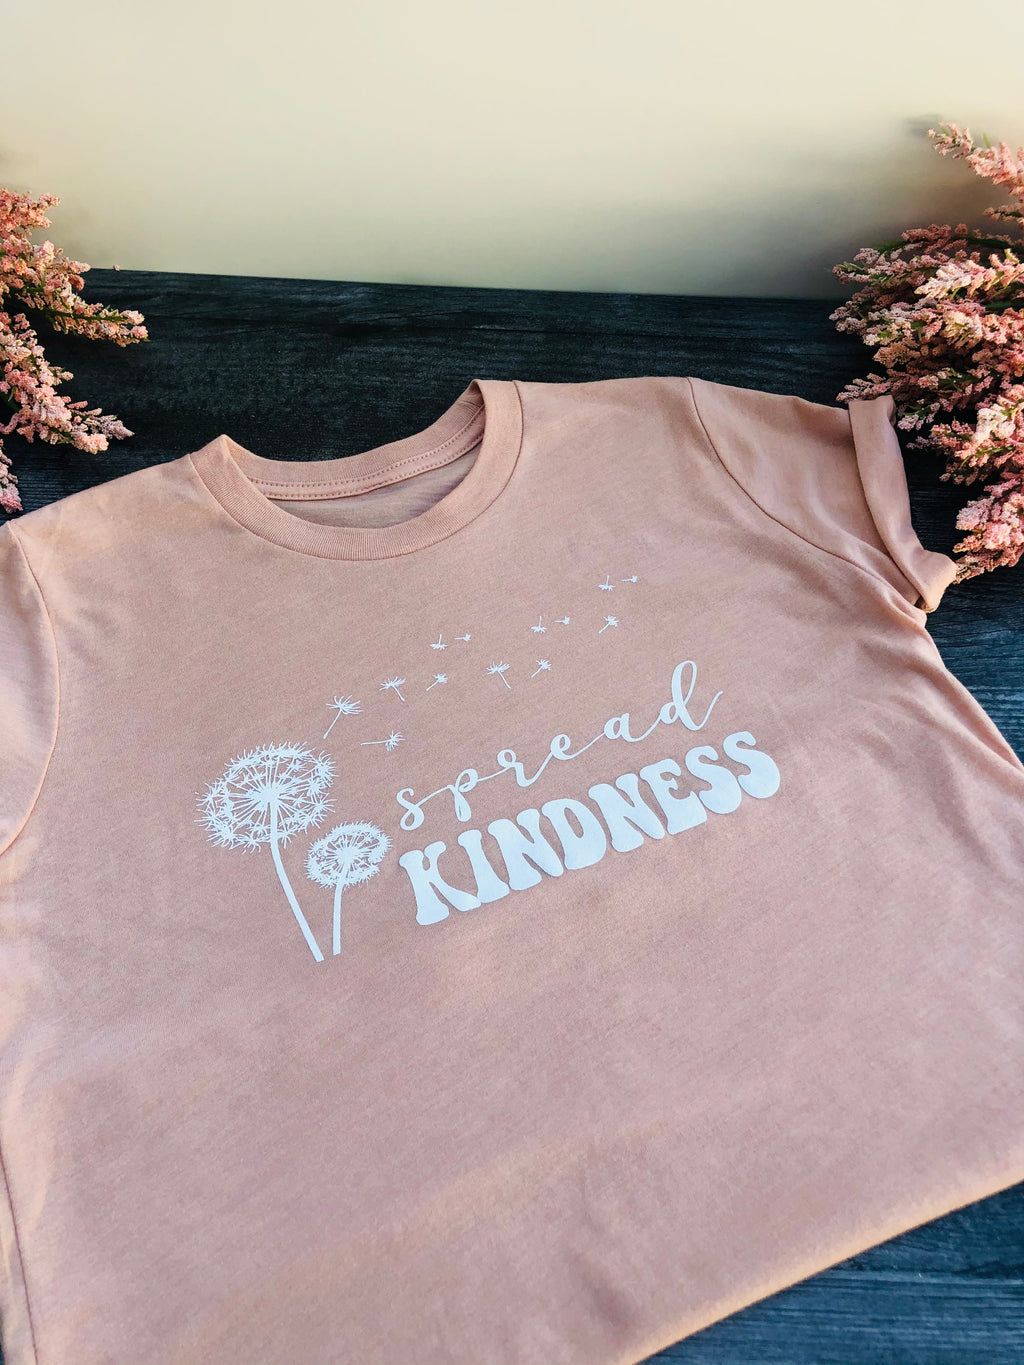 JCWINSEM Women's Boutique Clothing Spread Kindness Shirt